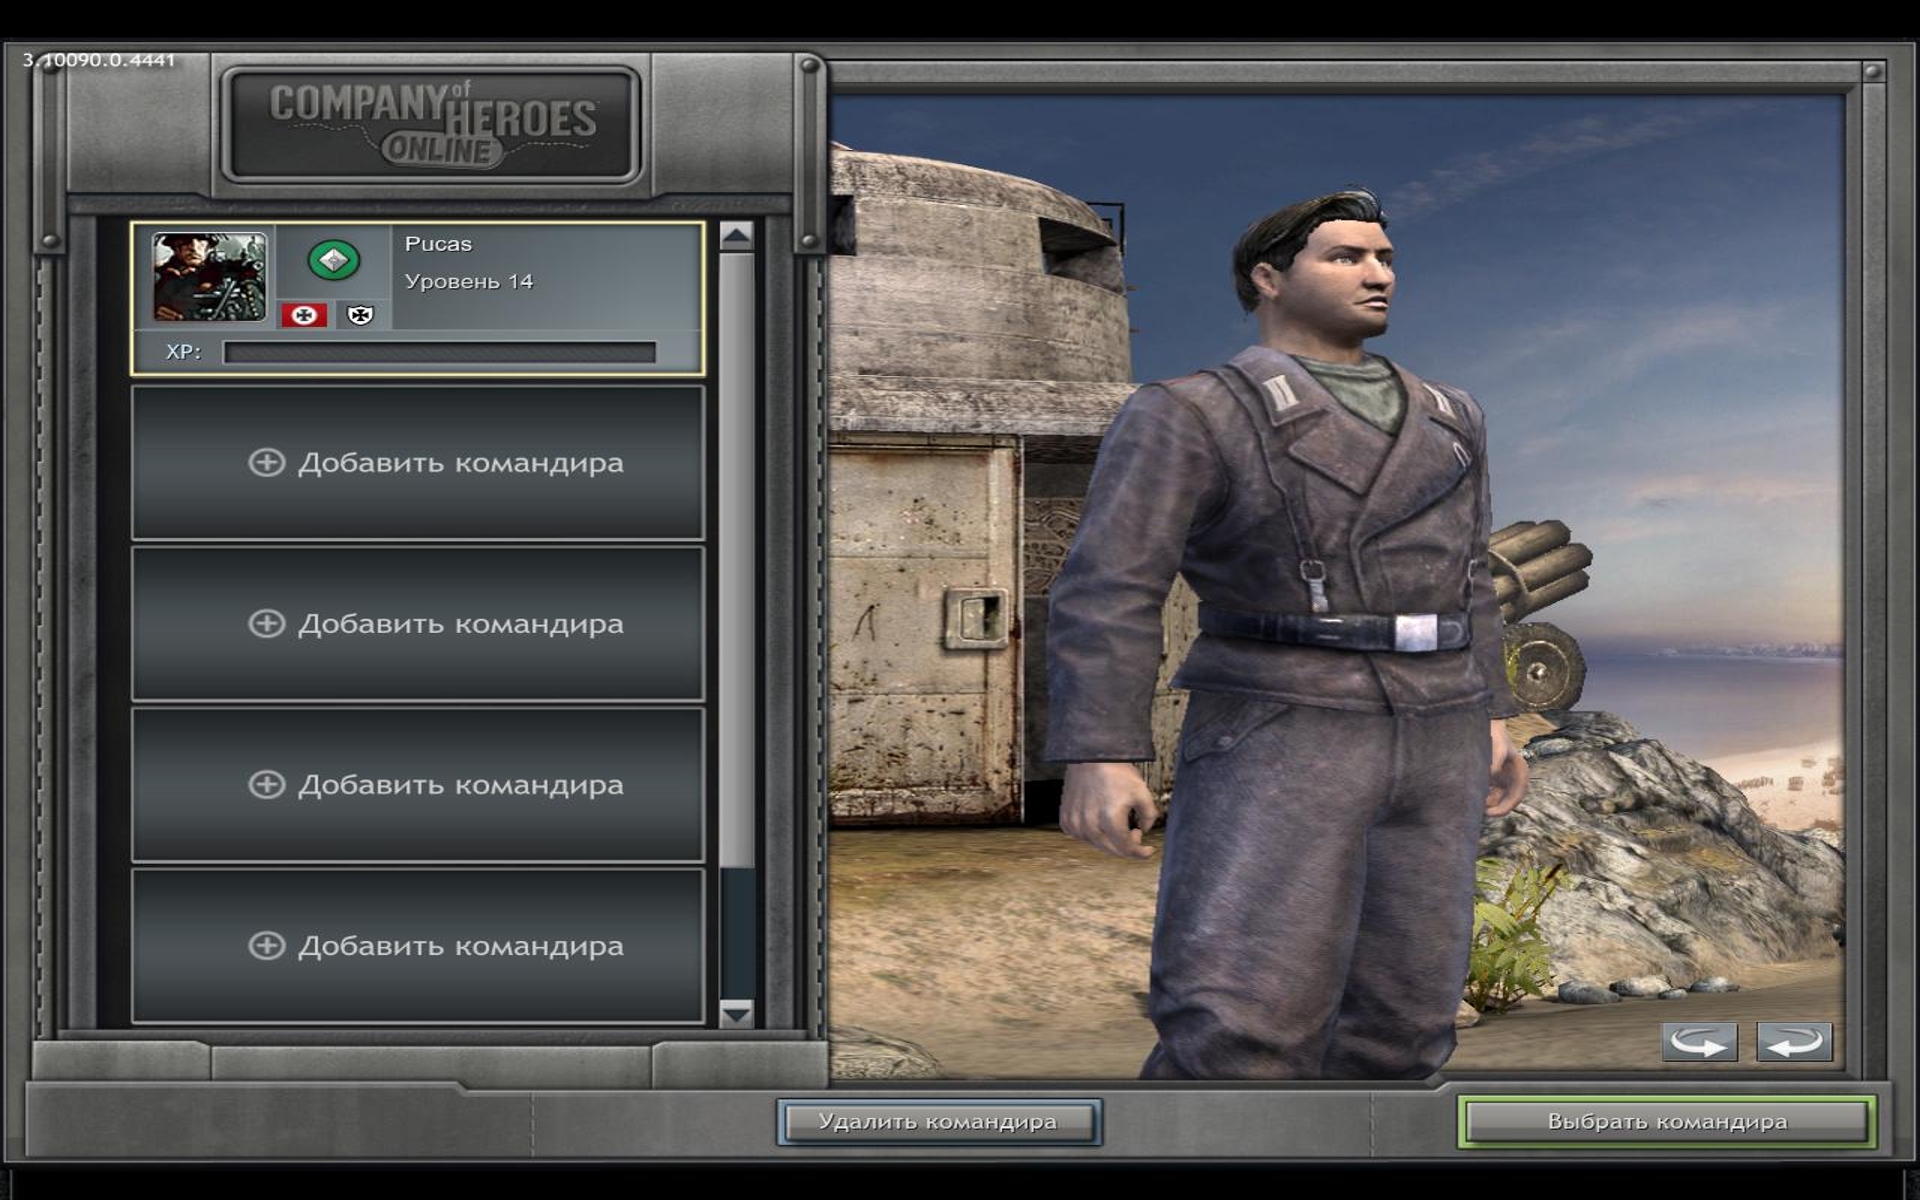 An avatar selection screen.